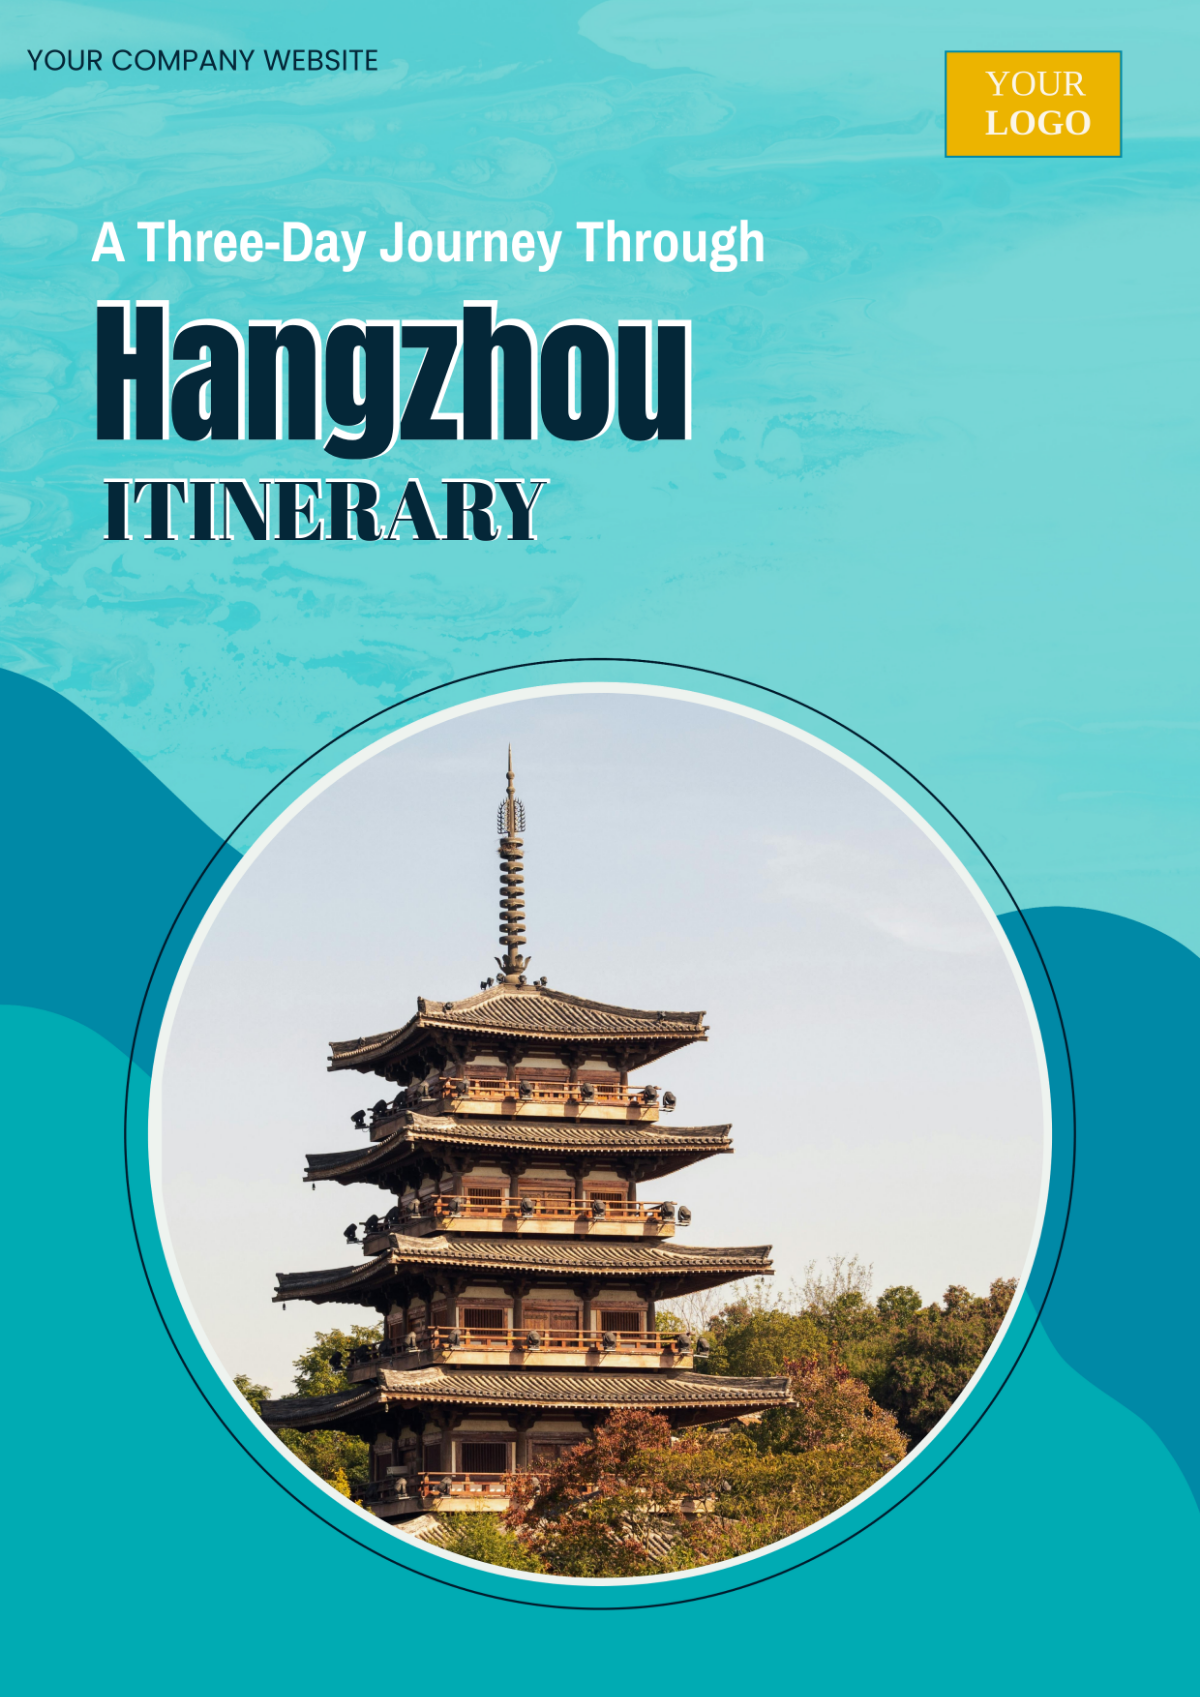 Hangzhou Itinerary Template